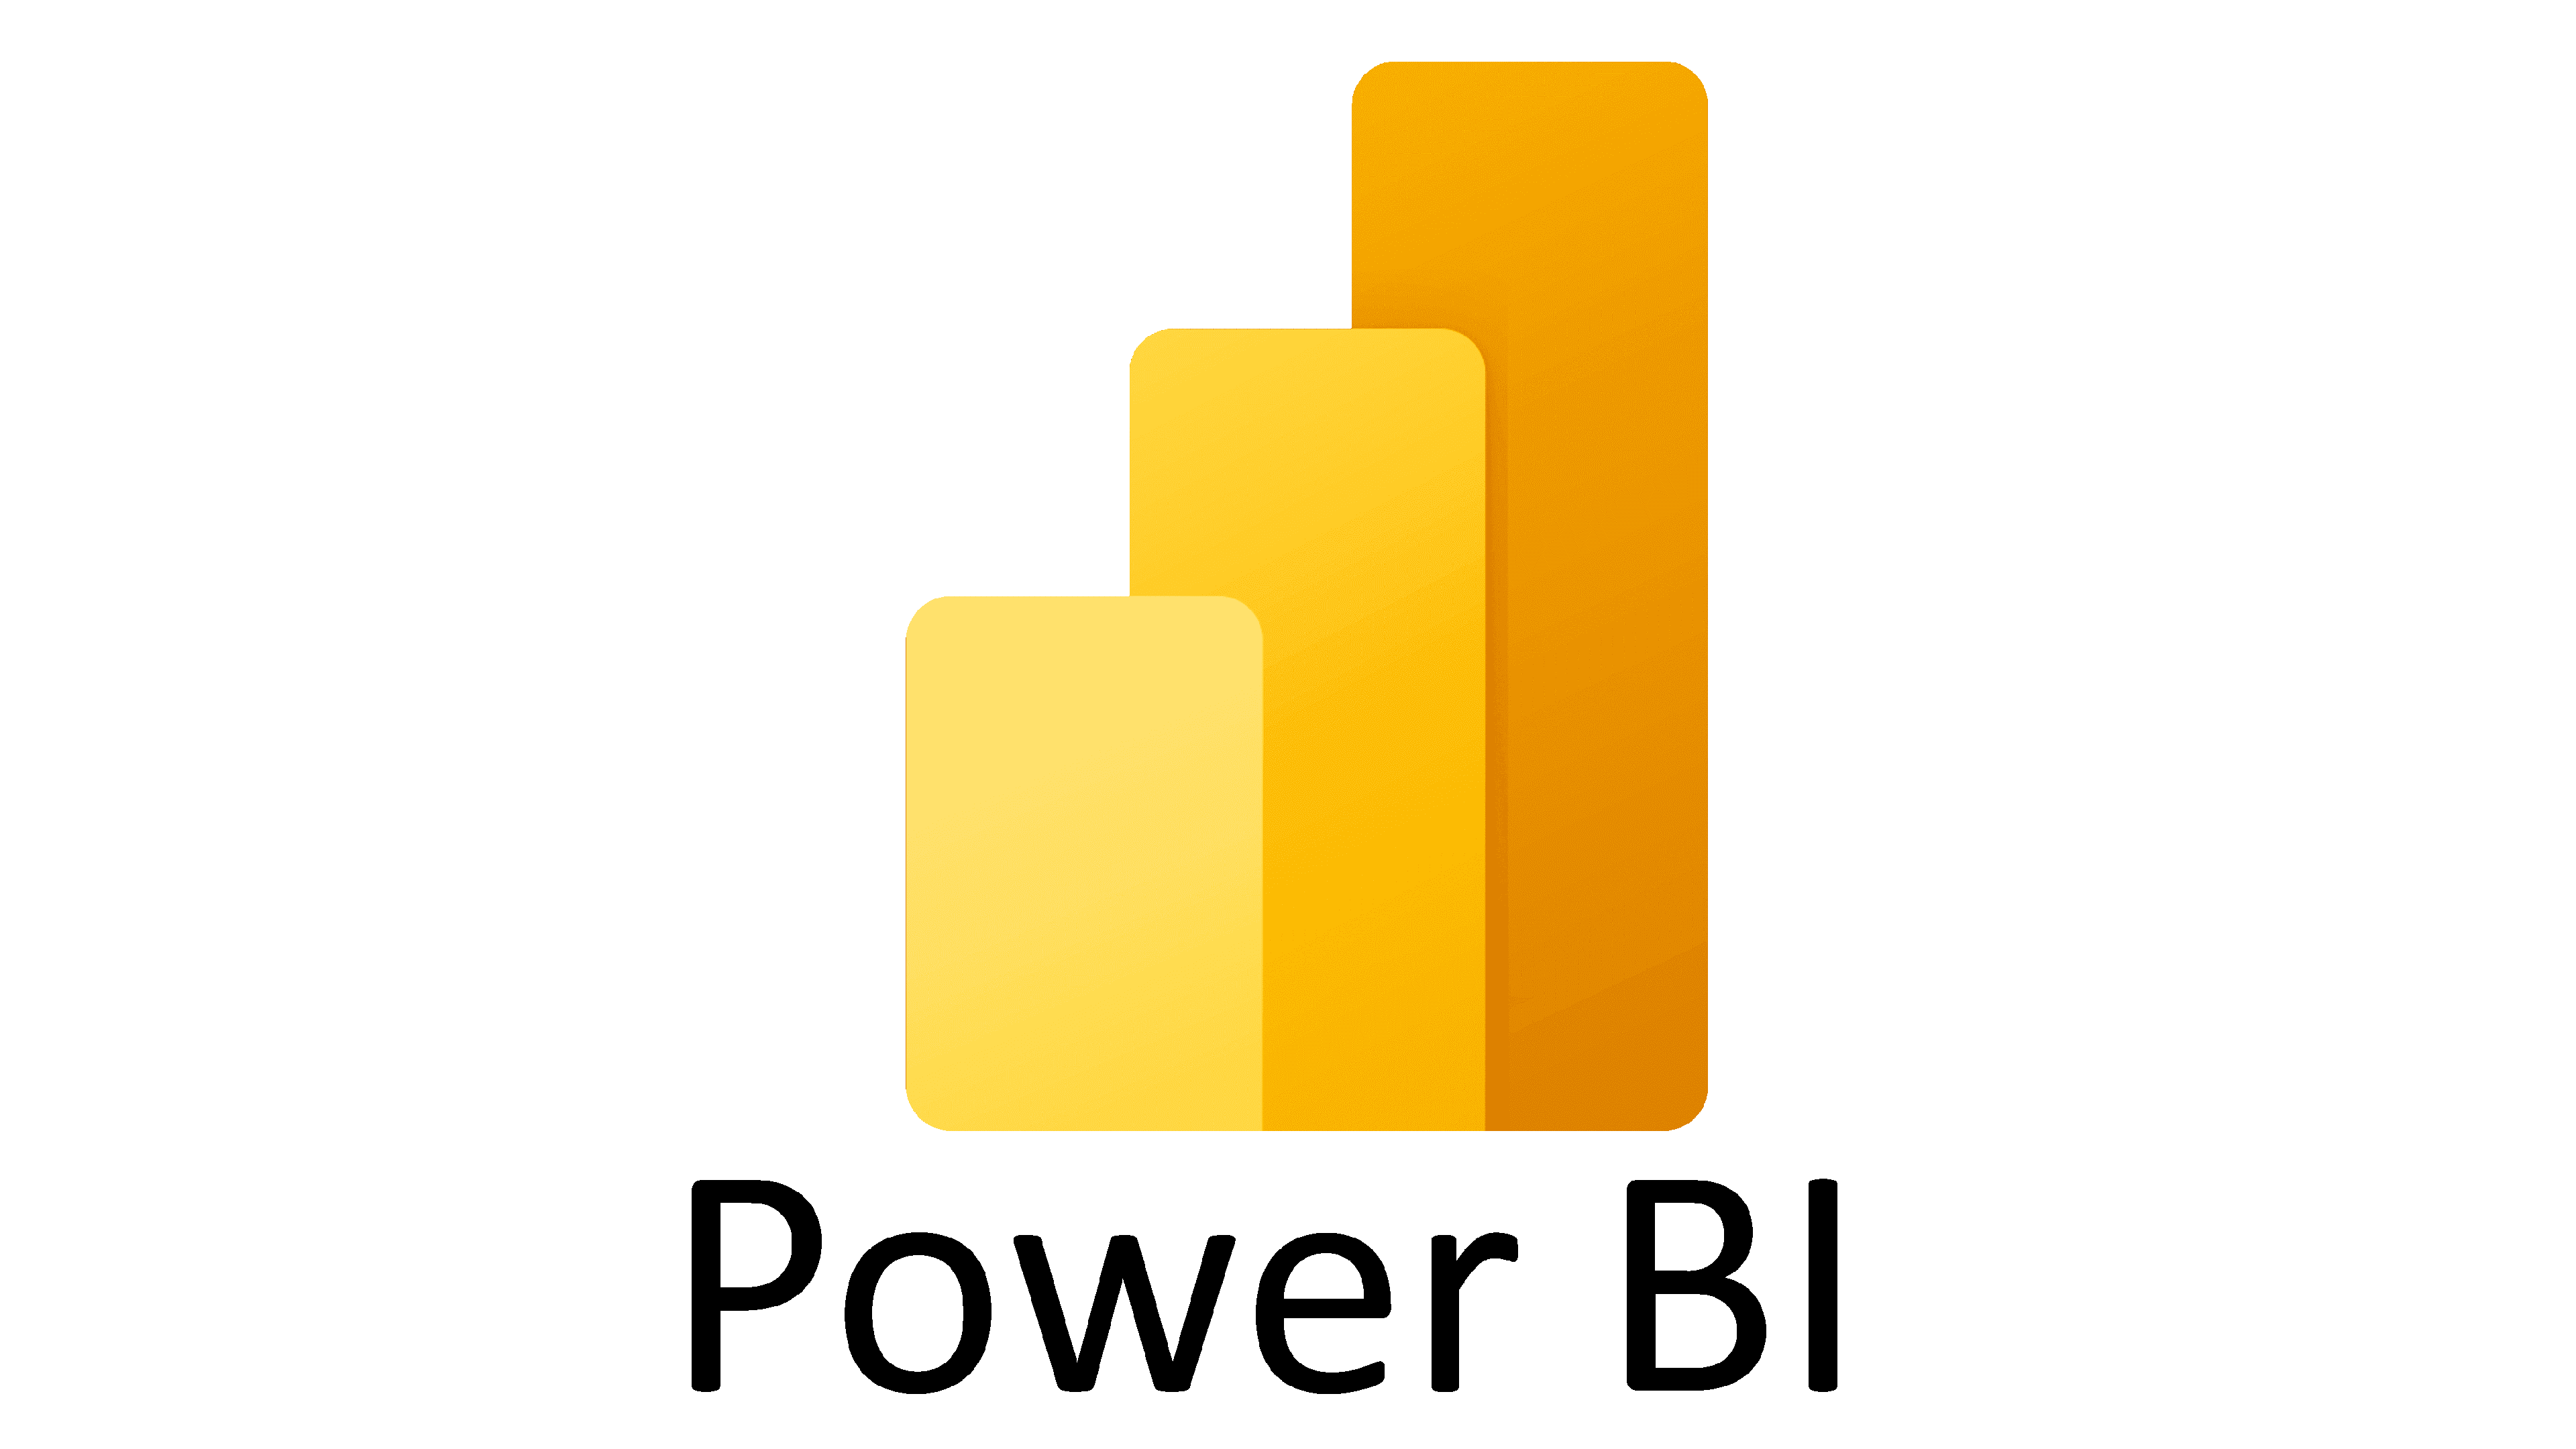 Power BI - Business Intelligence